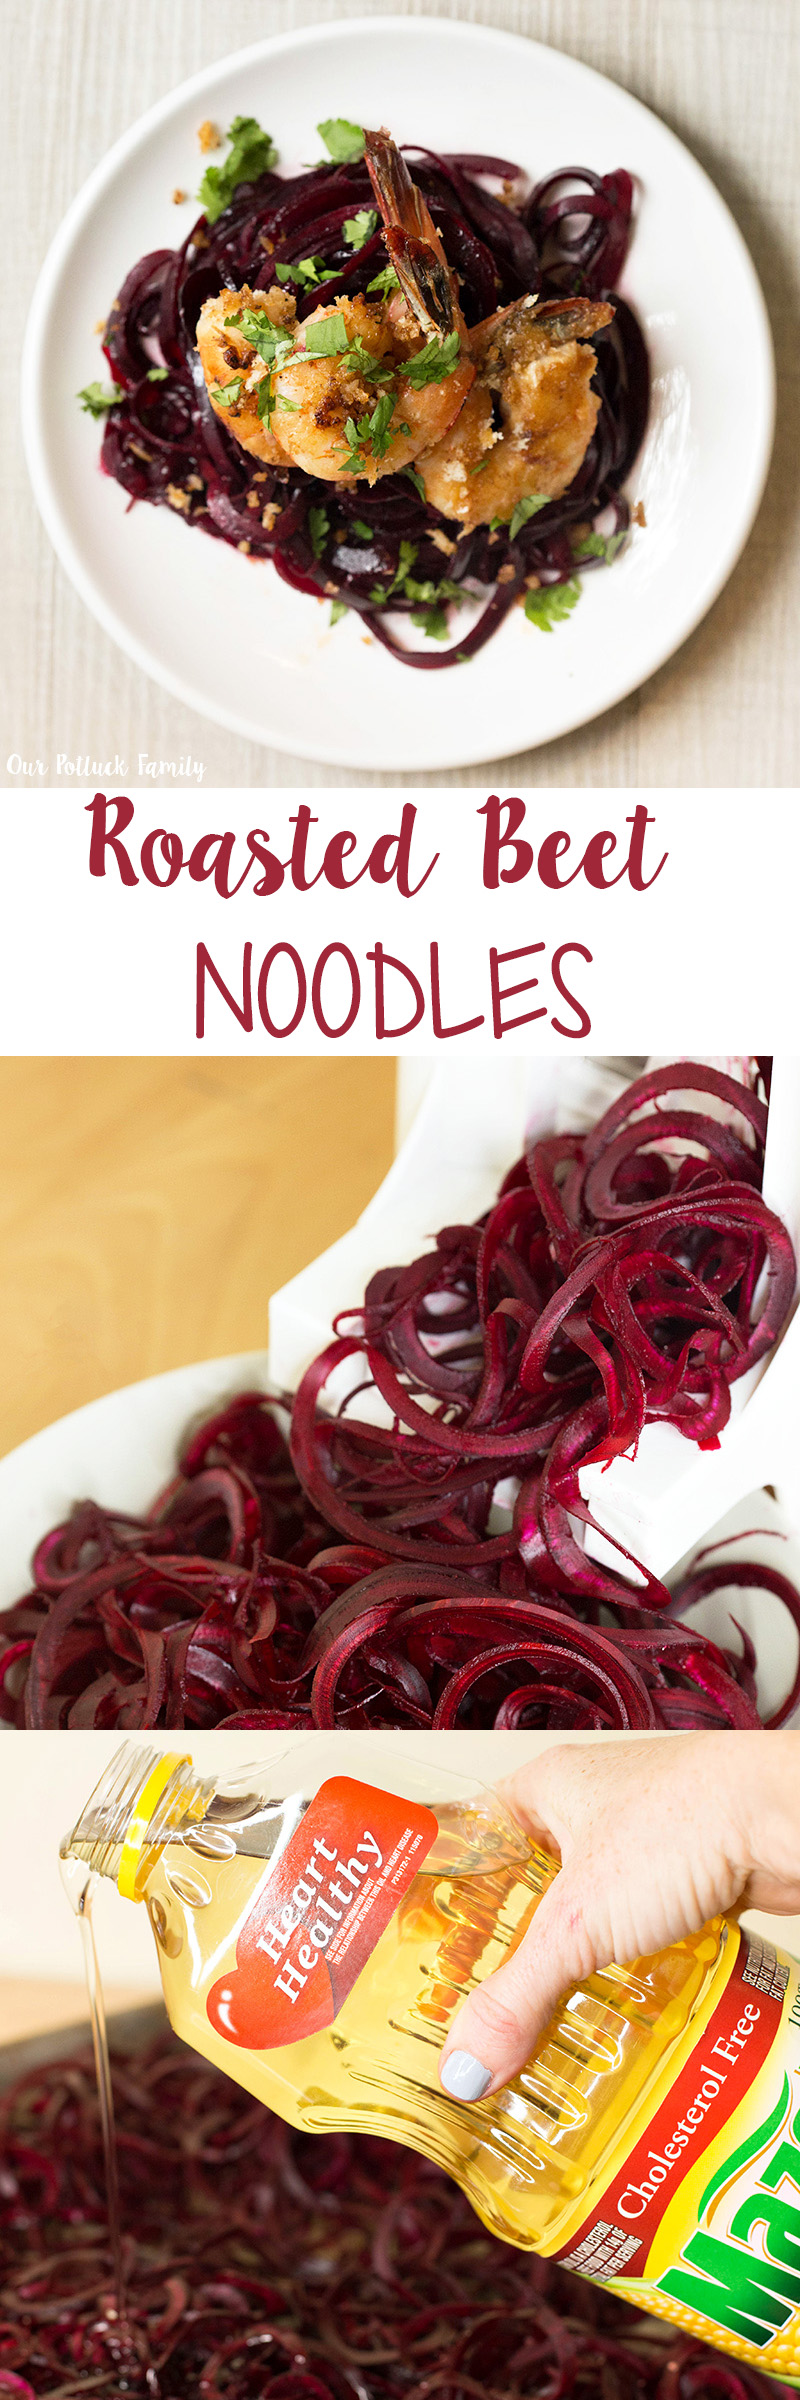 Roasted Beet Noodles recipe